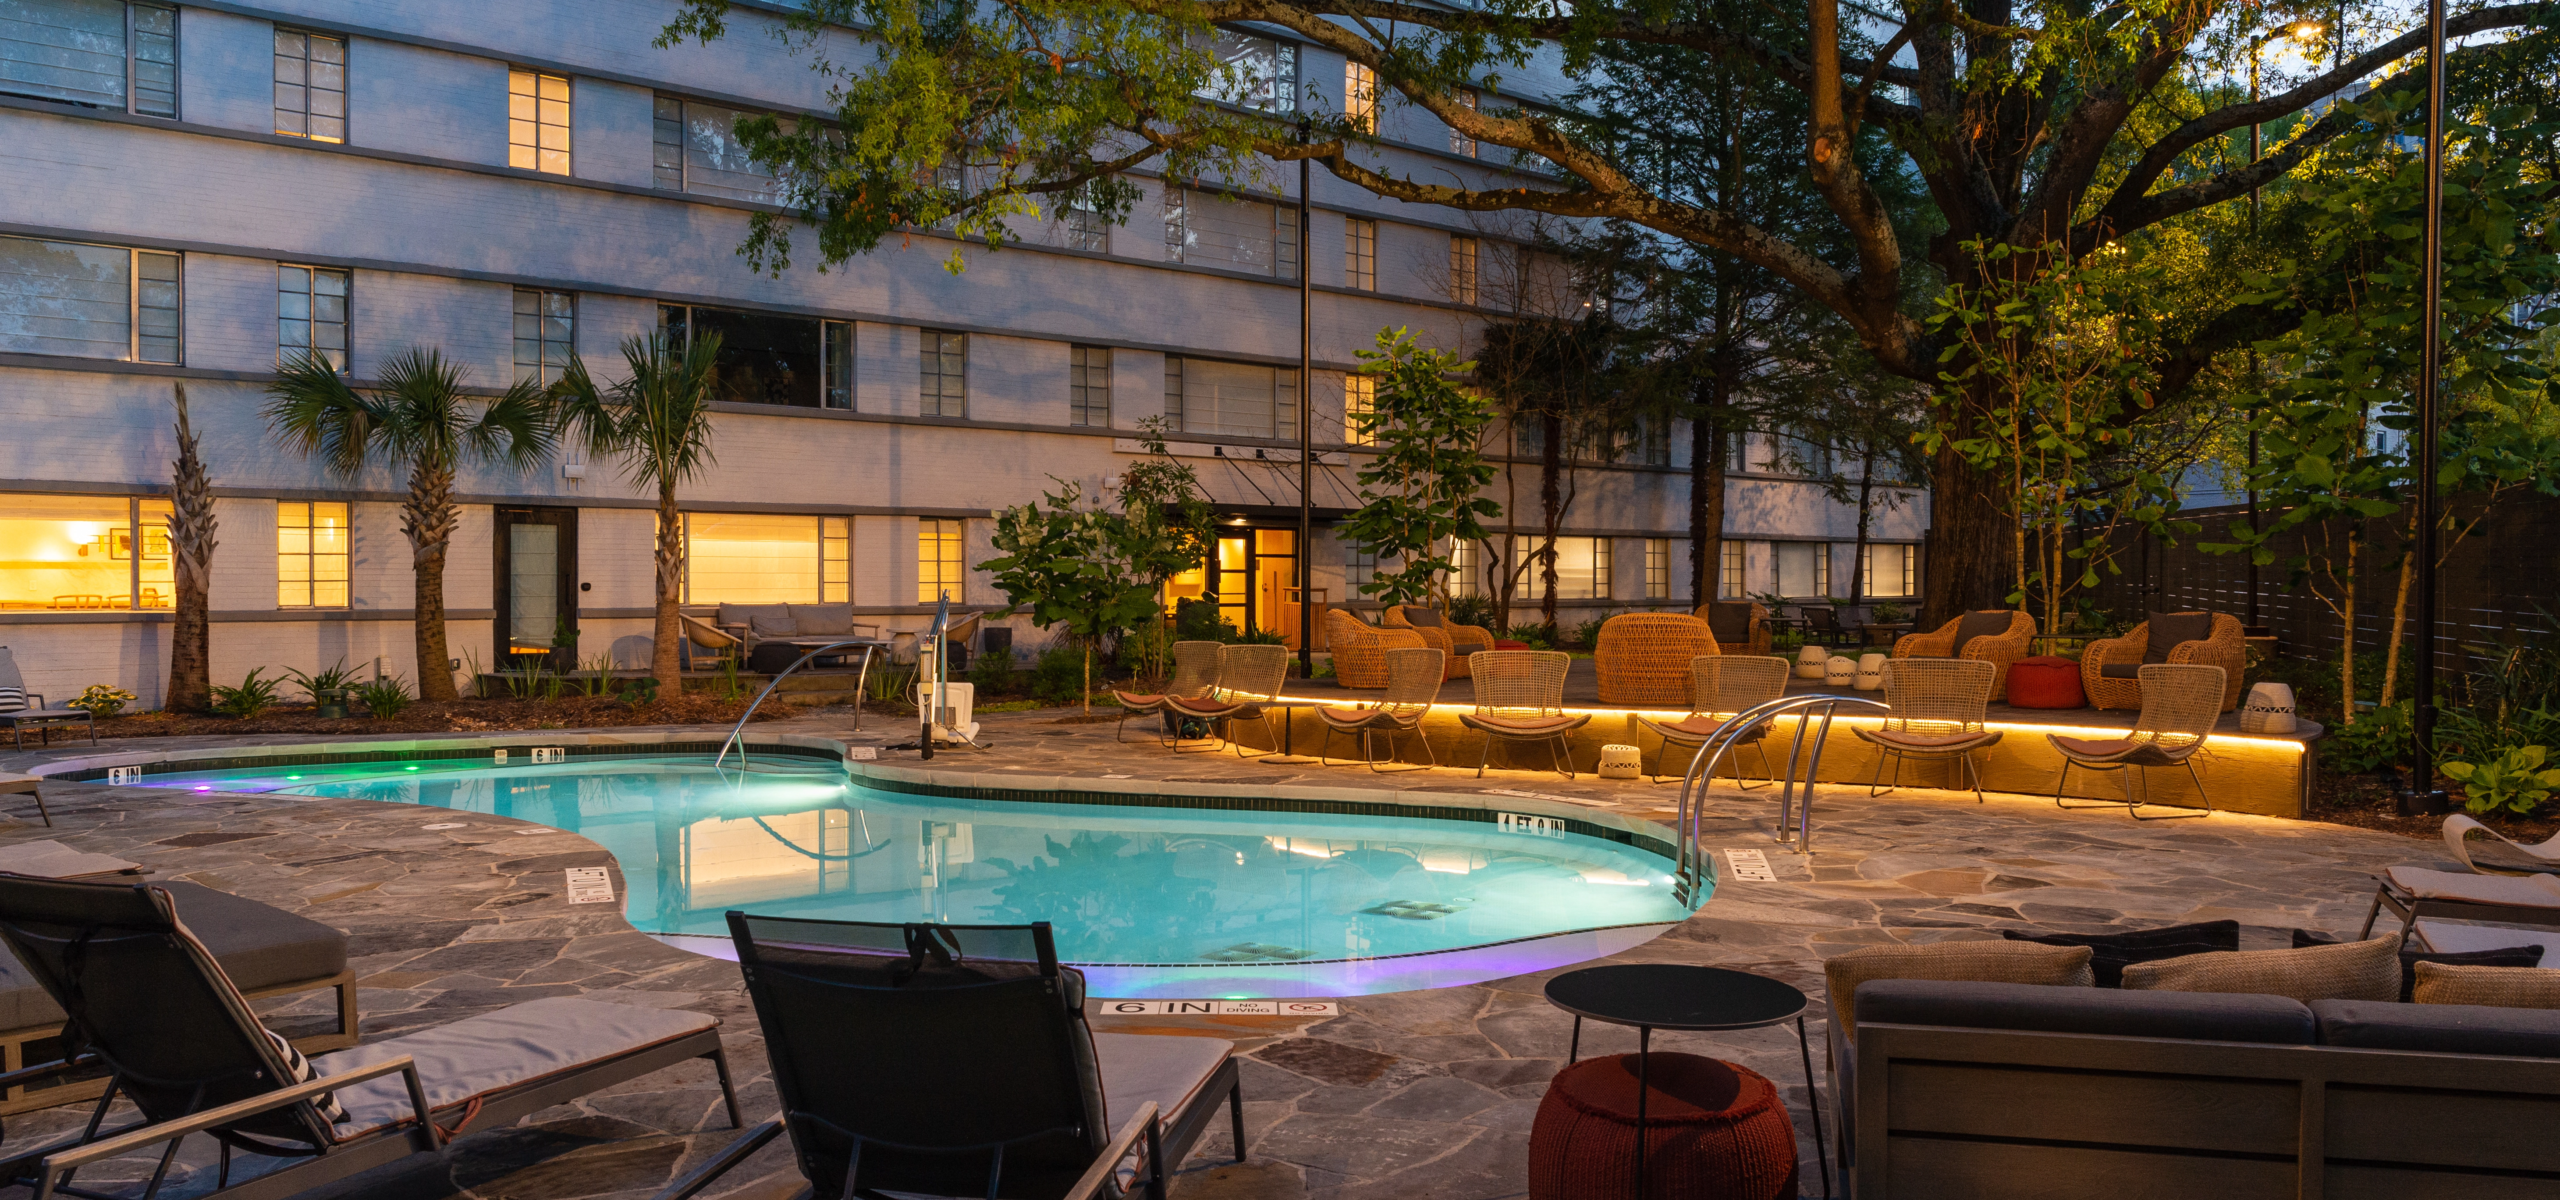 Atlanta’s Kimpton Sylvan Hotel Wins Silver Georgia Design Award - TSW Planning Architecture Landscape Architecture